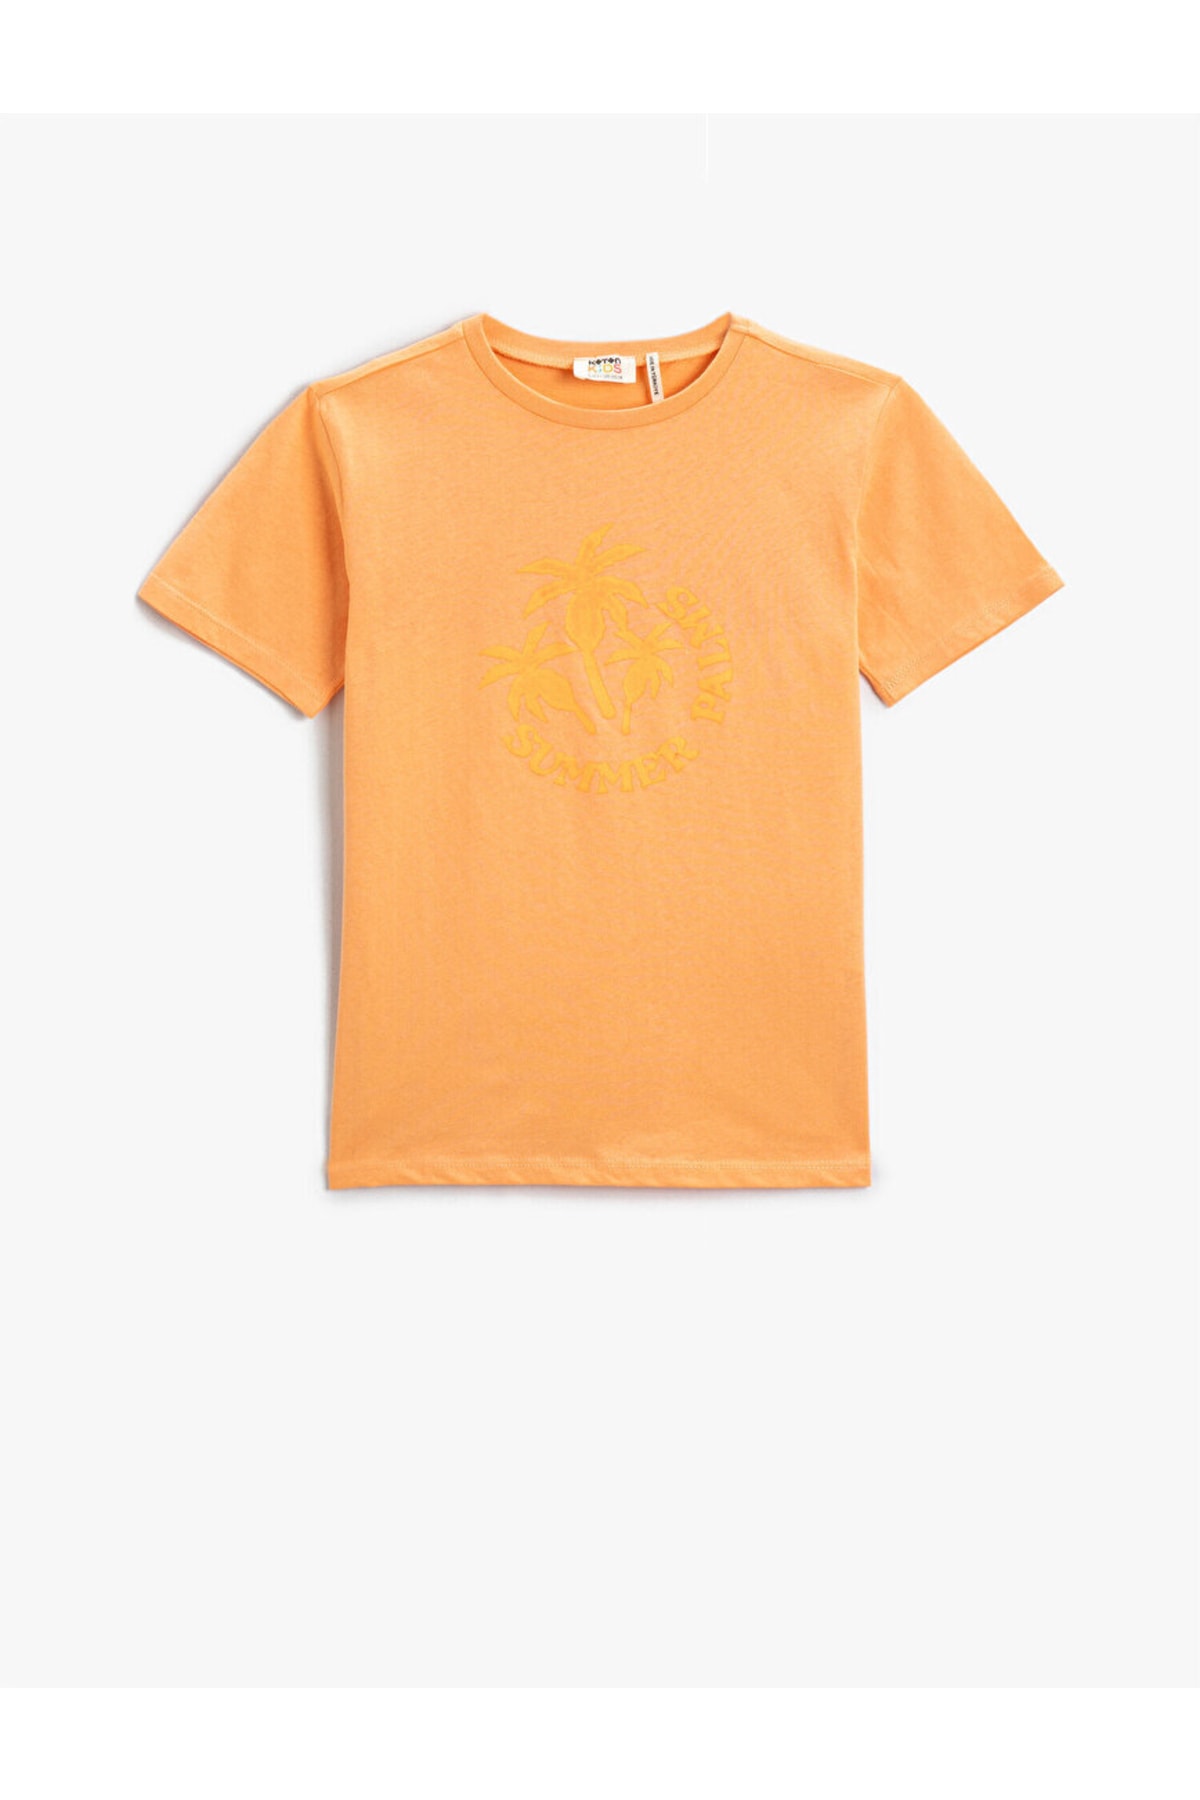 Koton Orange Palmie T Shirt Ss Reg2 Male.